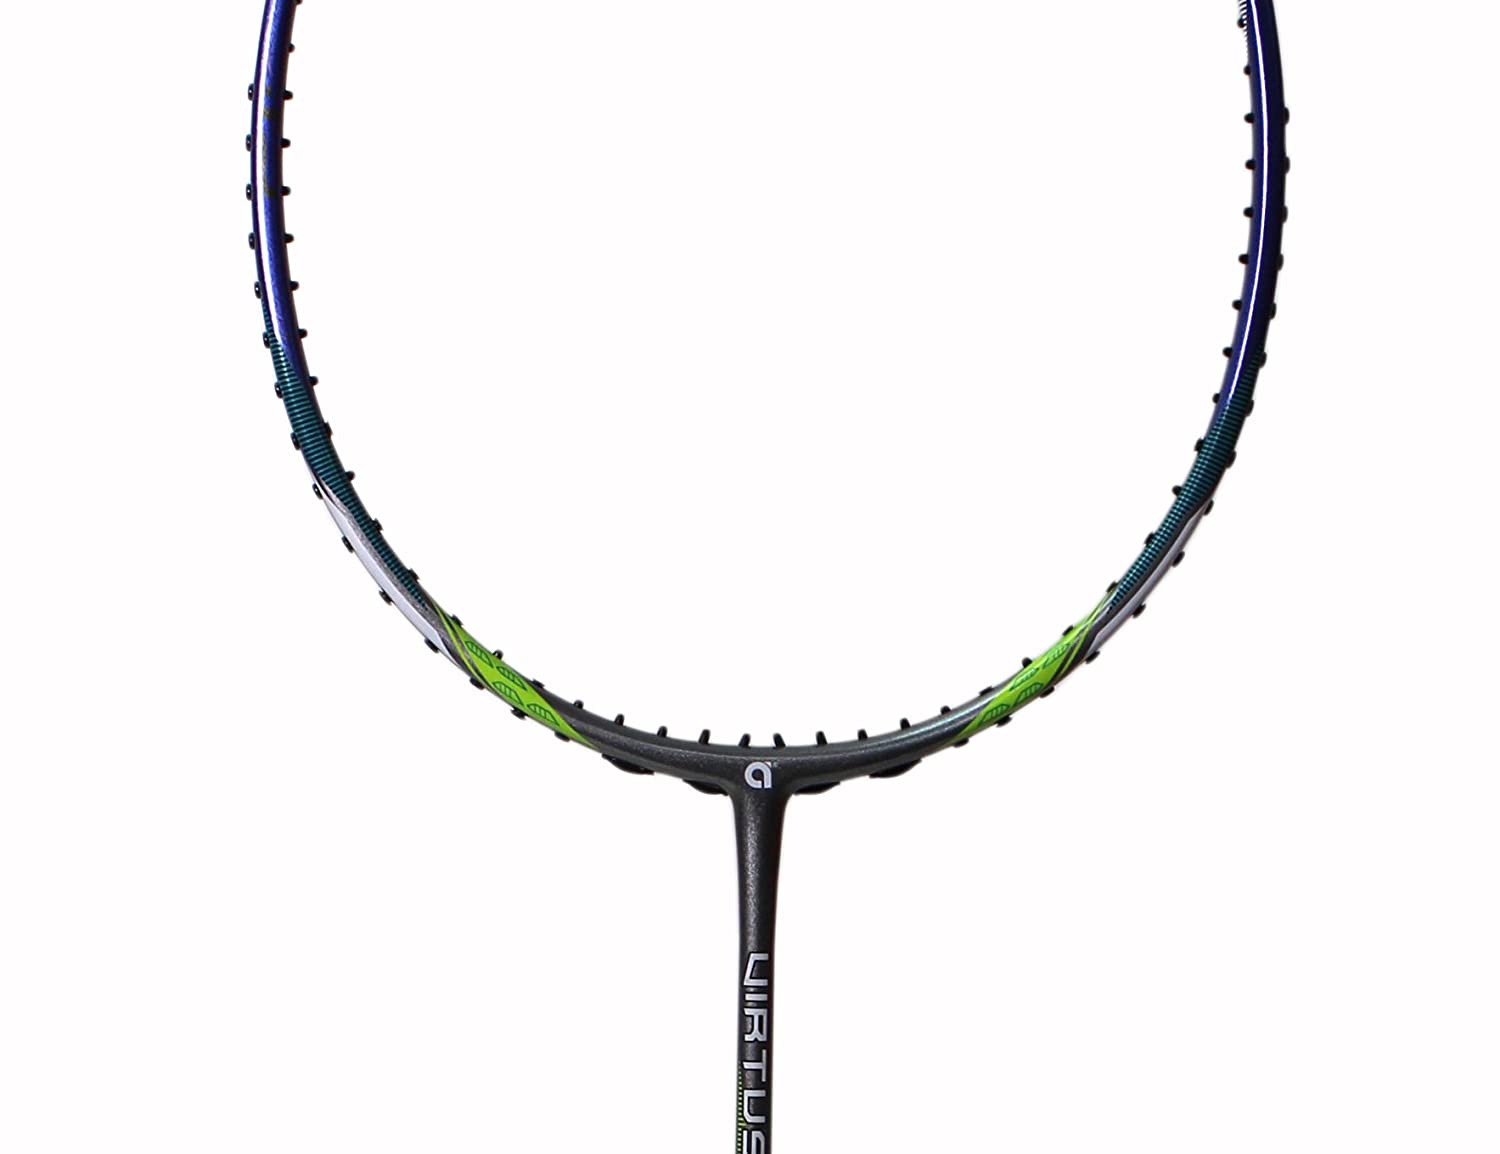 APACS Virtus 90 Badminton Racket